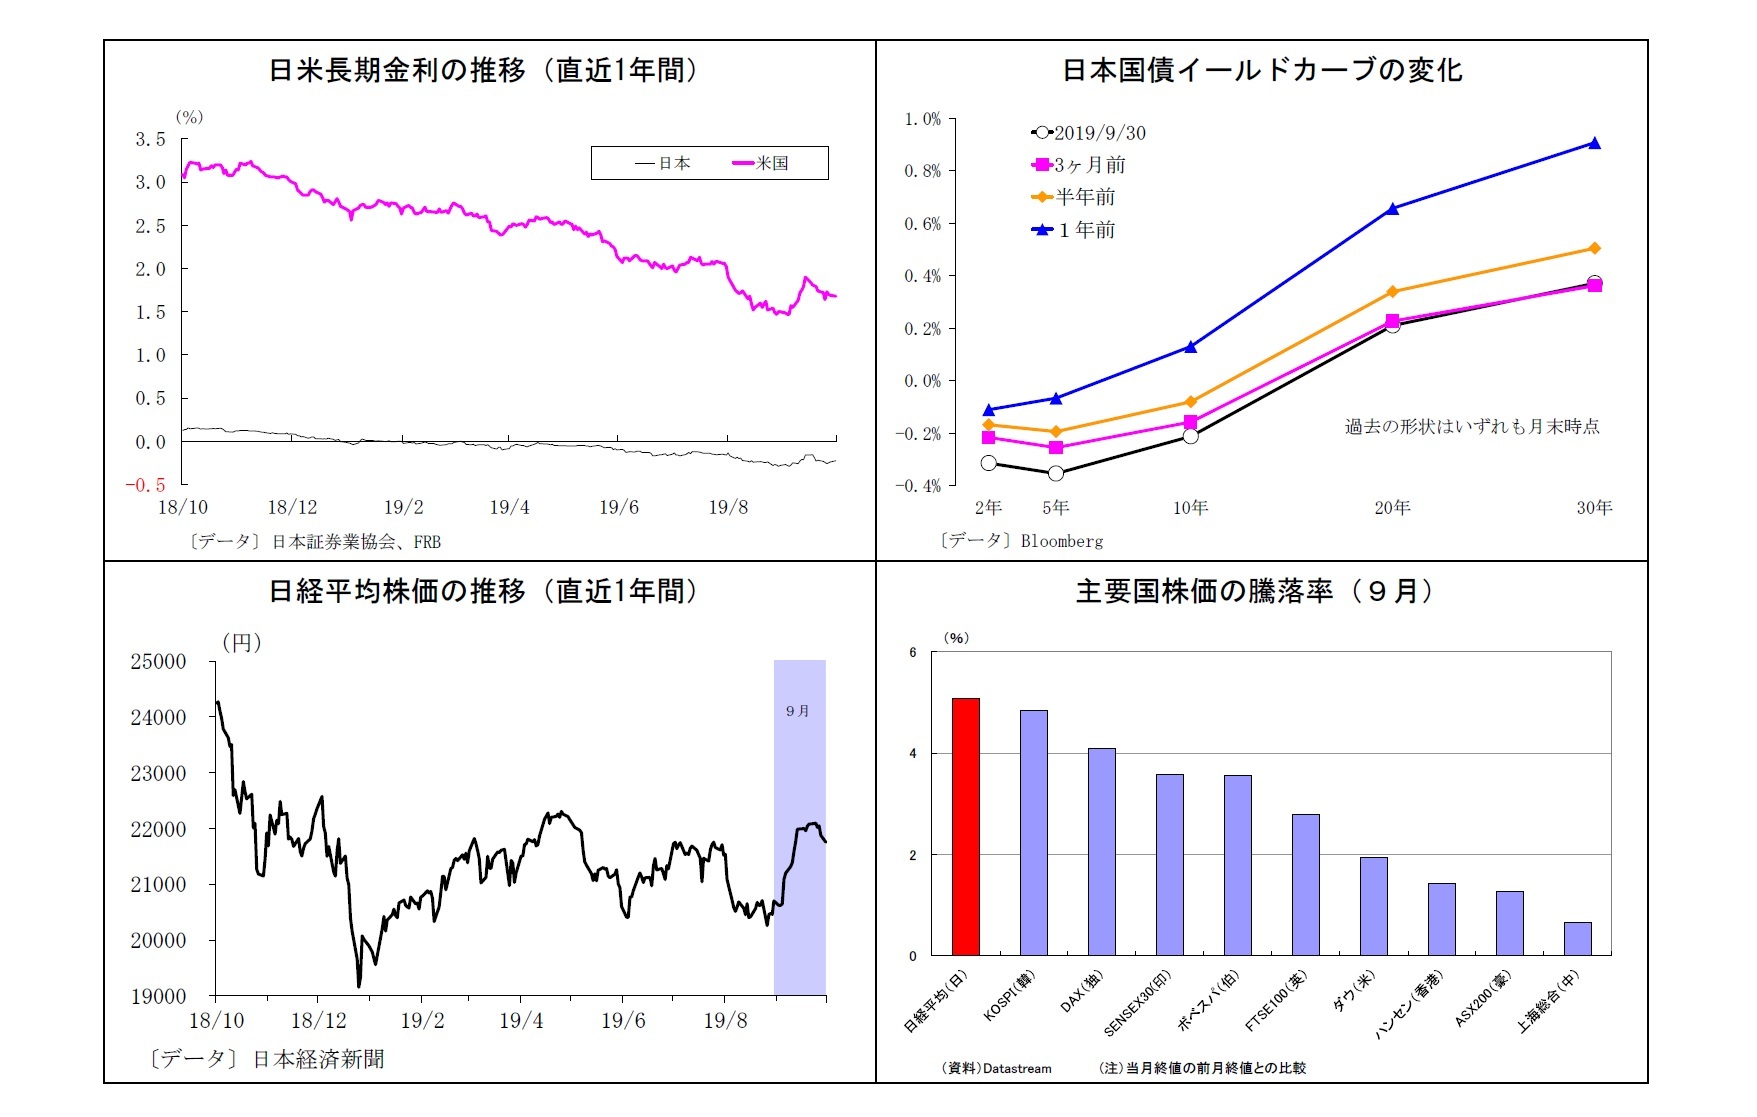 日米長期金利の推移（直近1年間）/日本国債イールドカーブの変化/日経平均株価の推移（直近1年間）/主要国株価の騰落率（９月）